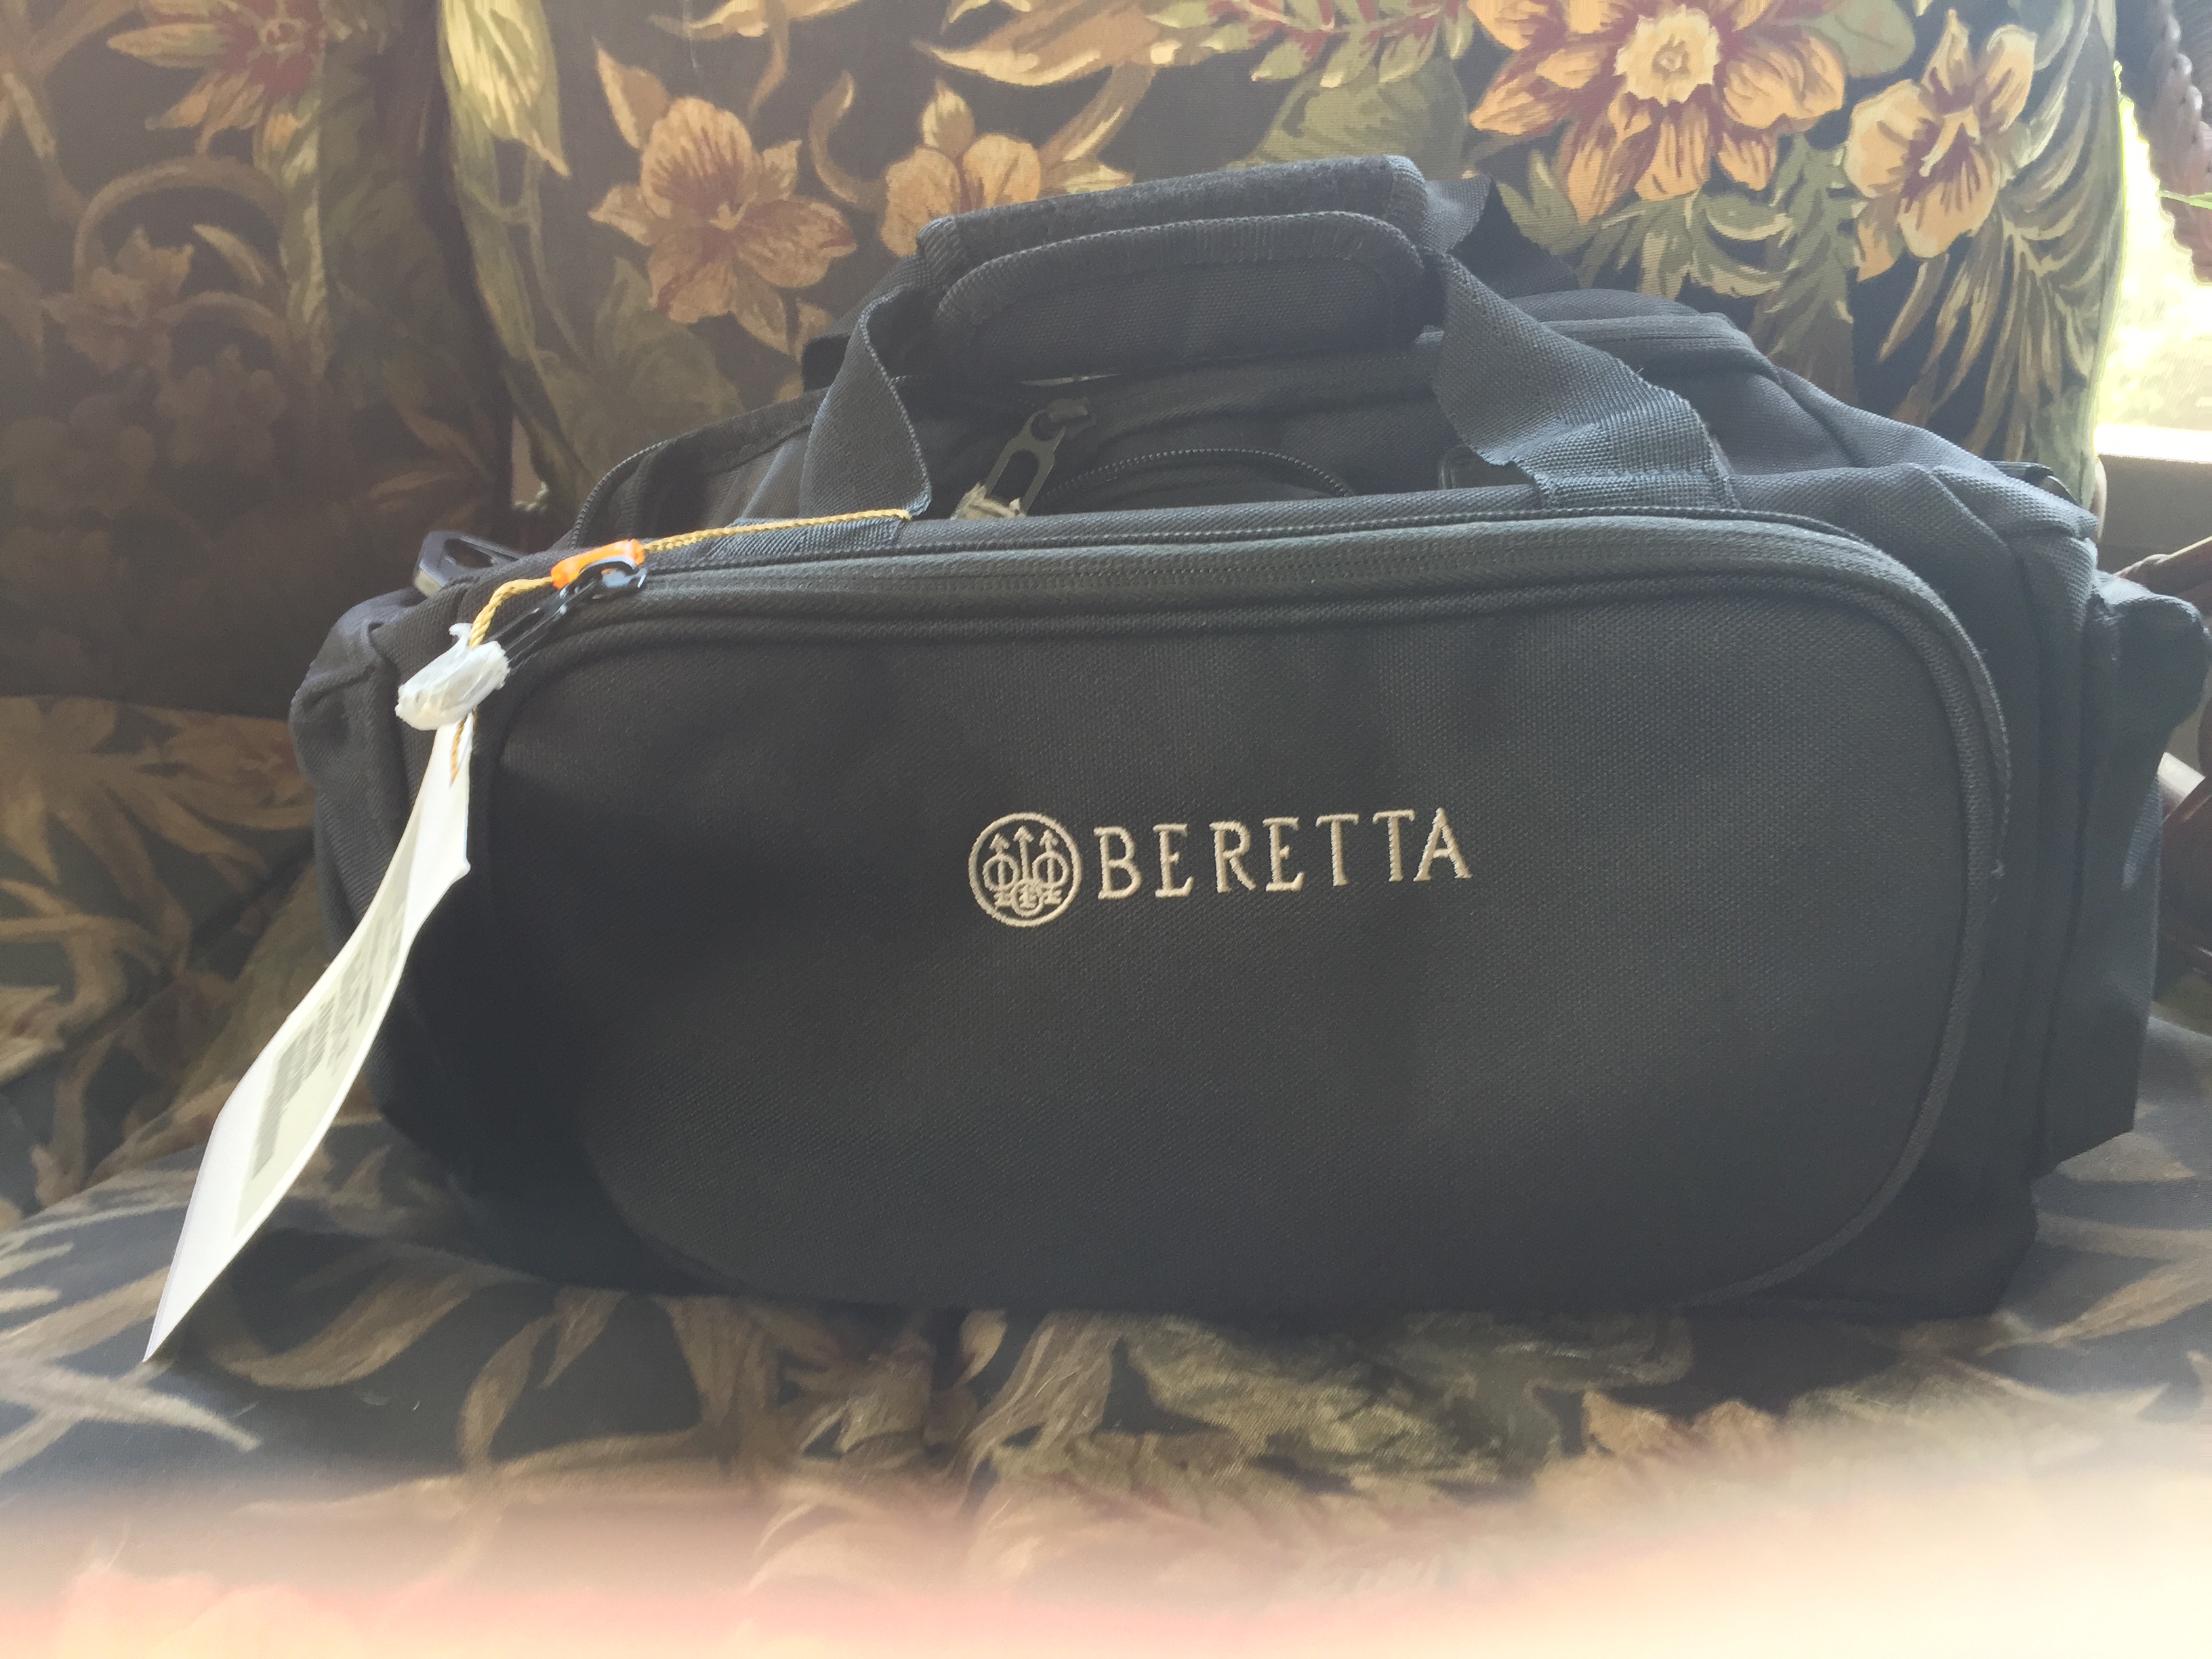 Brand new Baretta tactical range bag